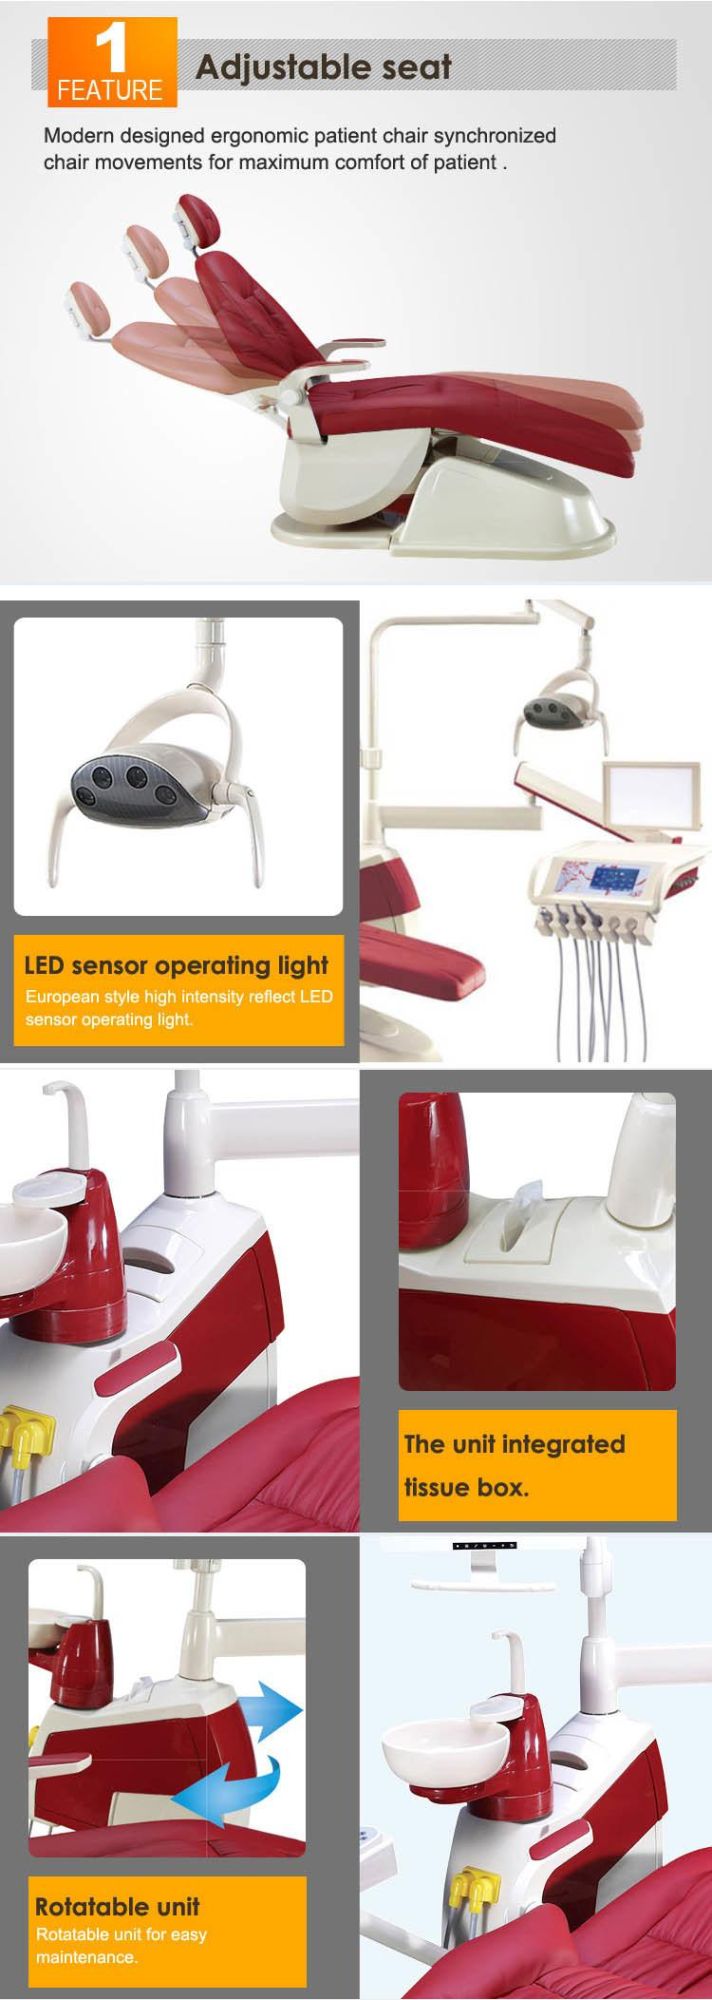 European Luxury LED FDA&ISO Approved Dental Chair Phoenix Dental Chair/Triangle Dental Equipment/ Dental Chair